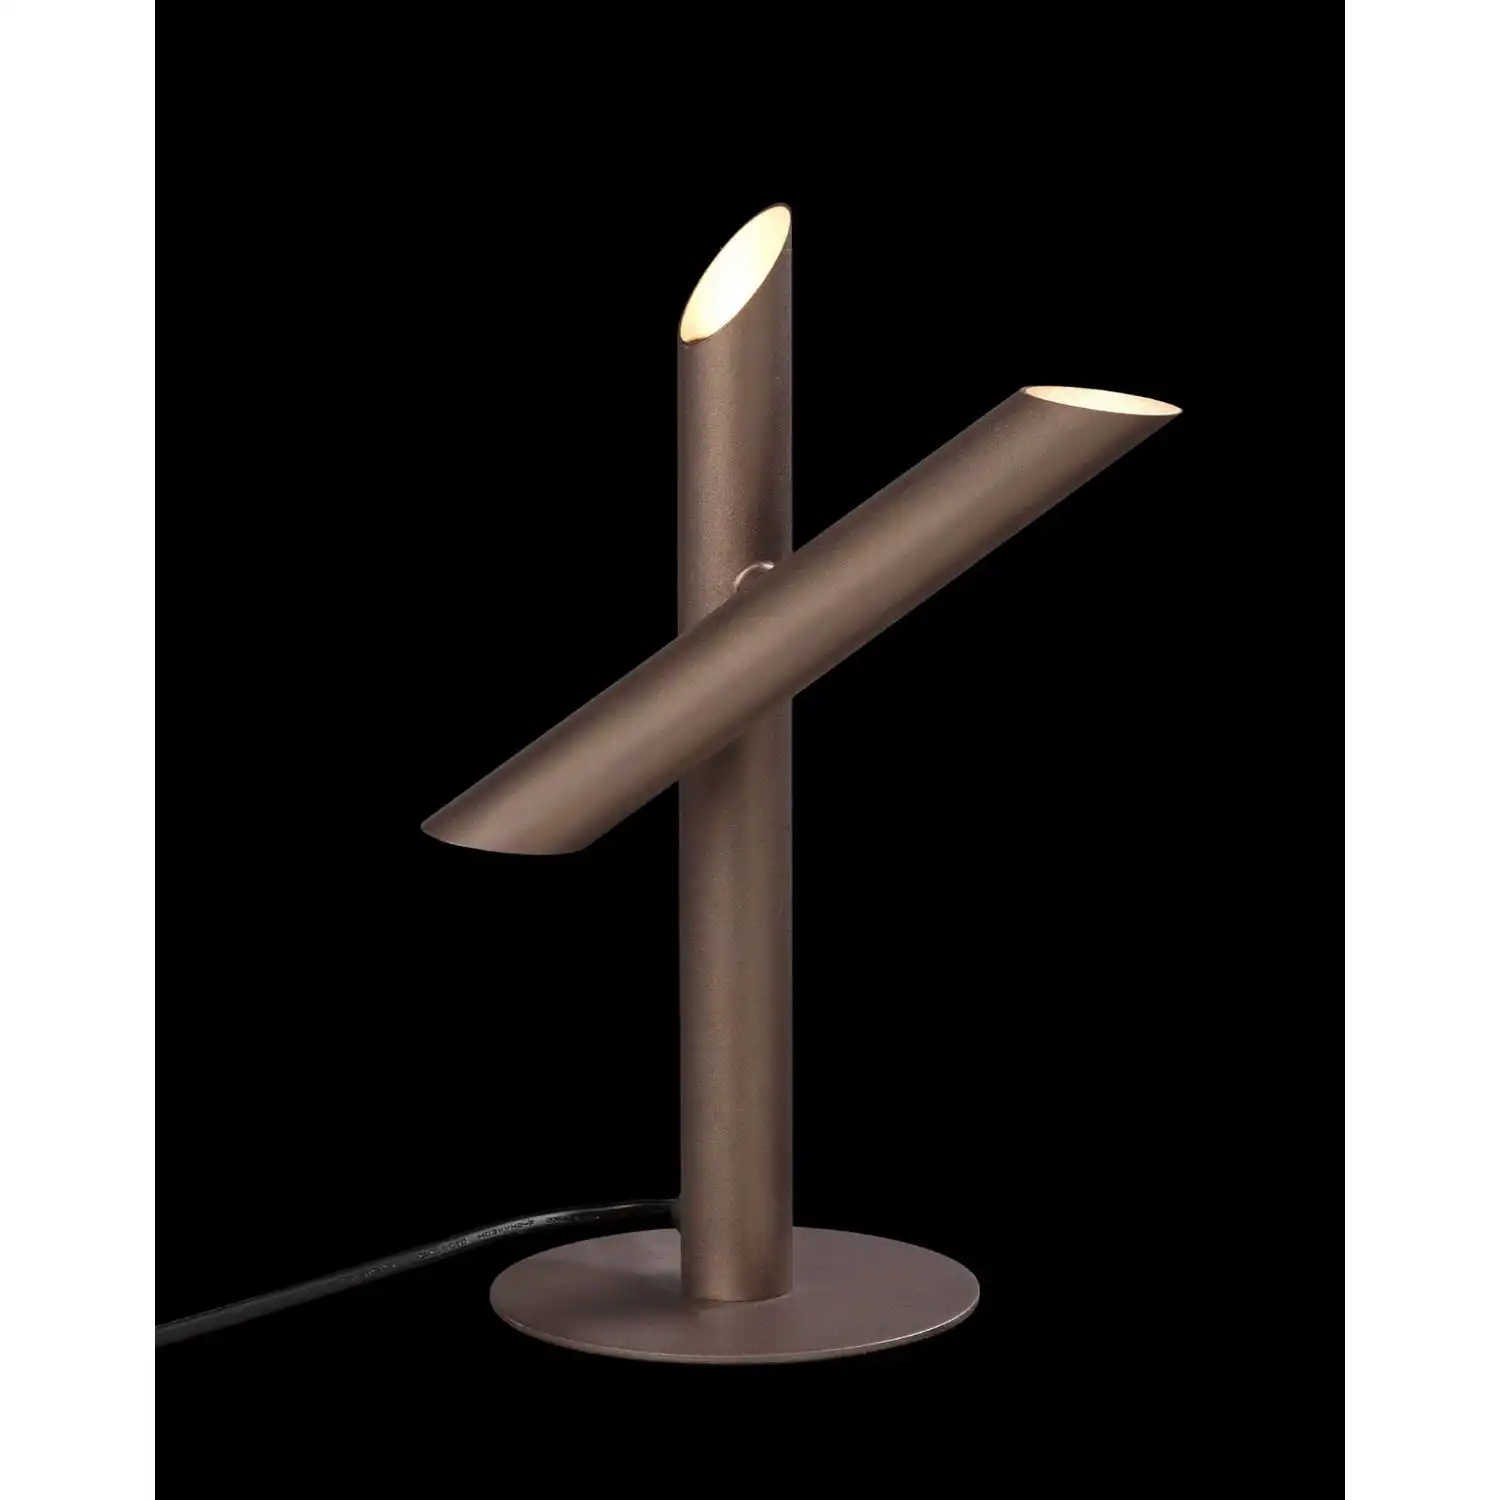 Take Bronze Table Lamp 9W LED 3000K, 800lm, Bronze, 3yrs Warranty